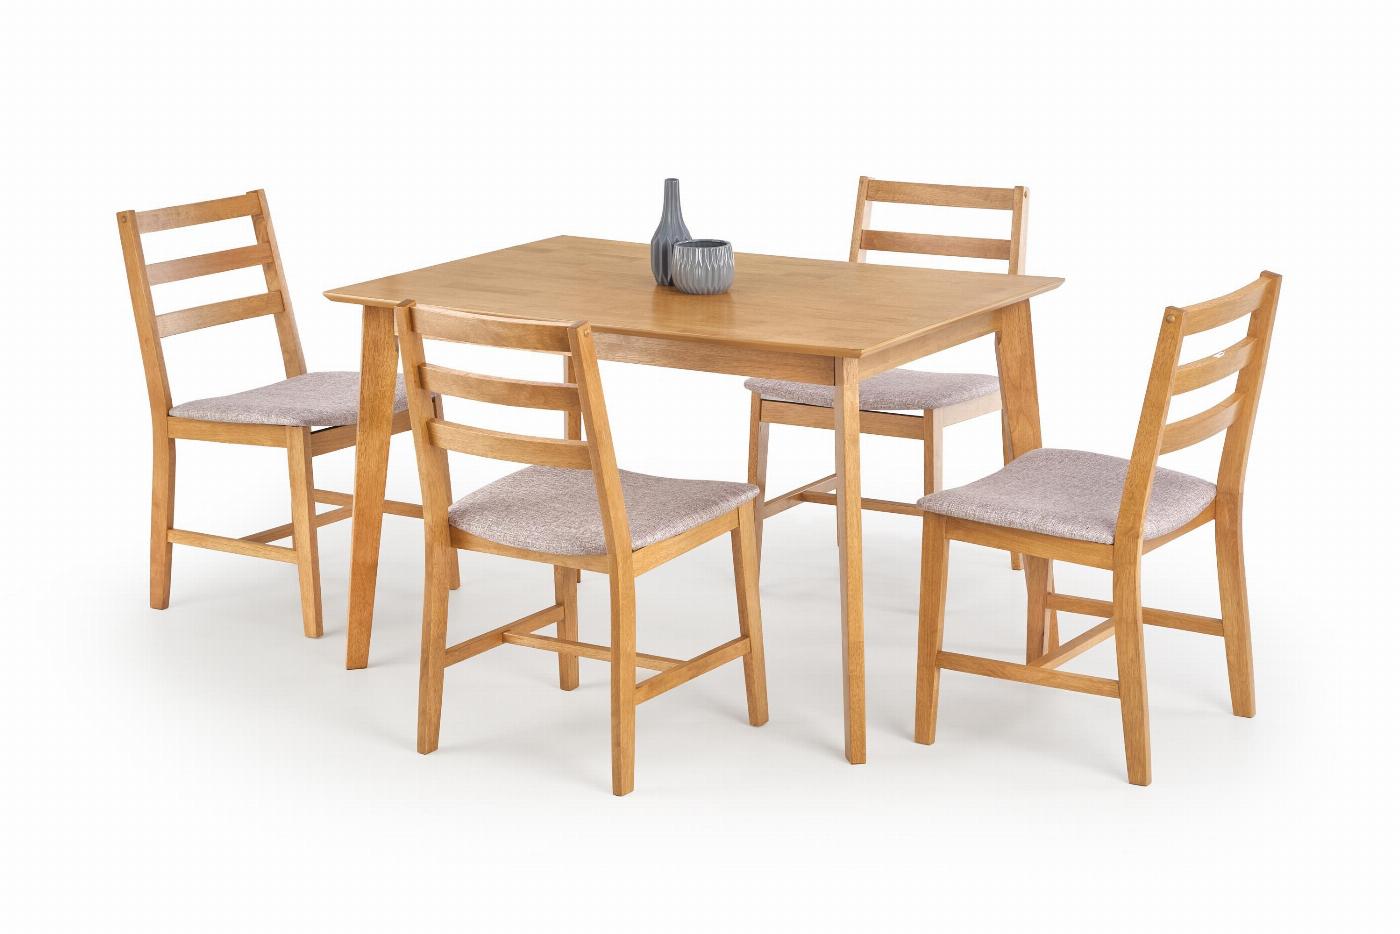 CORDOBA stół + 4 krzesła (1p=1szt)